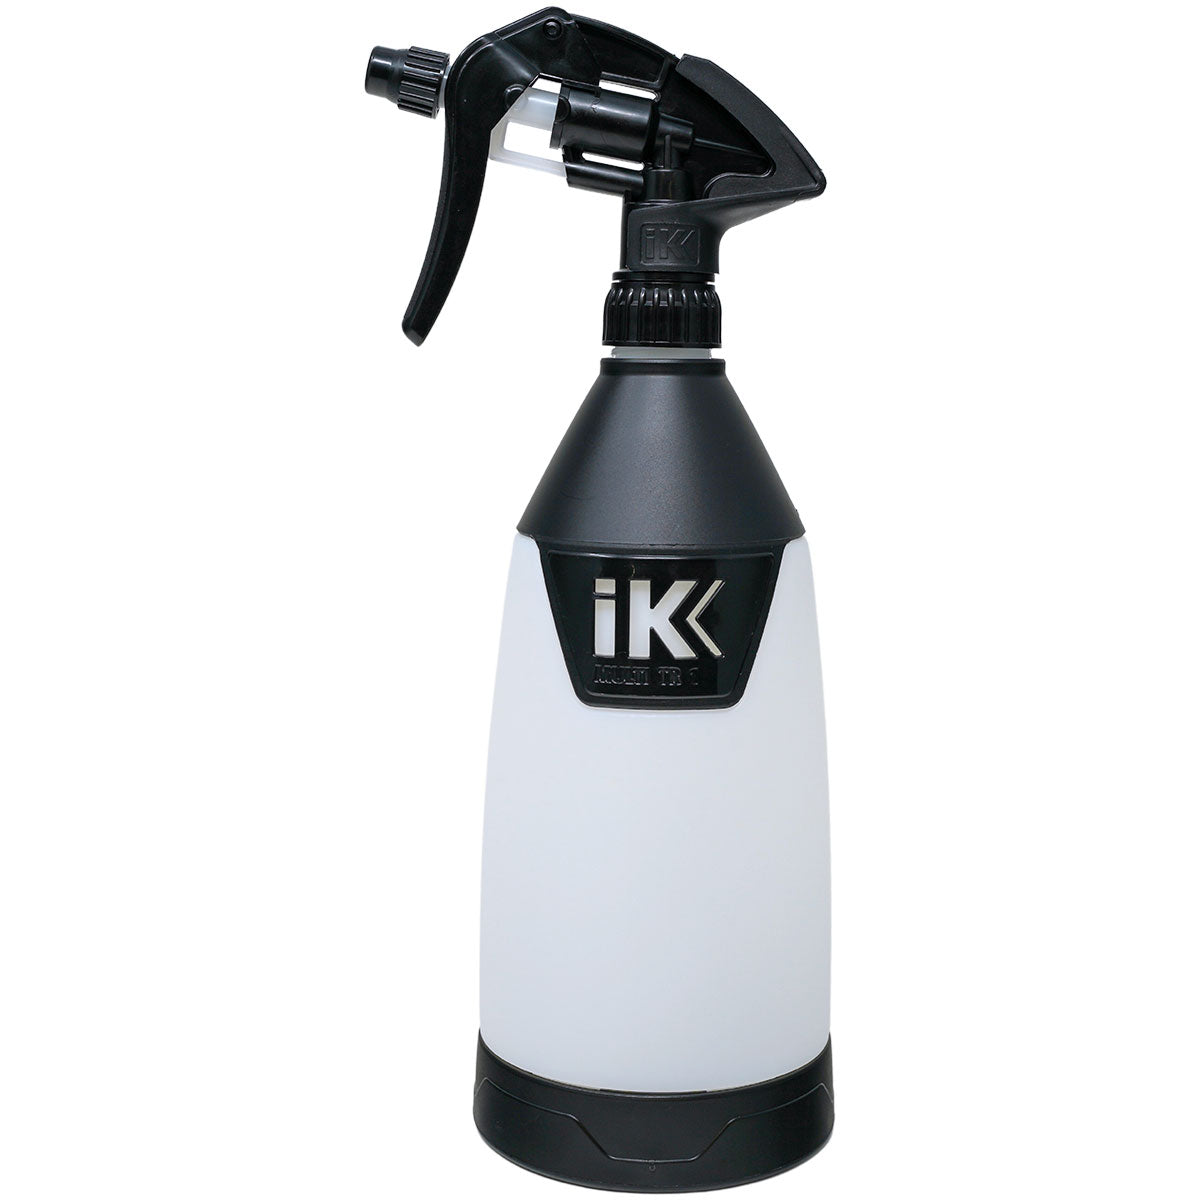 IK Sprayer Multi TR 1 - 1 Litre Sprayer